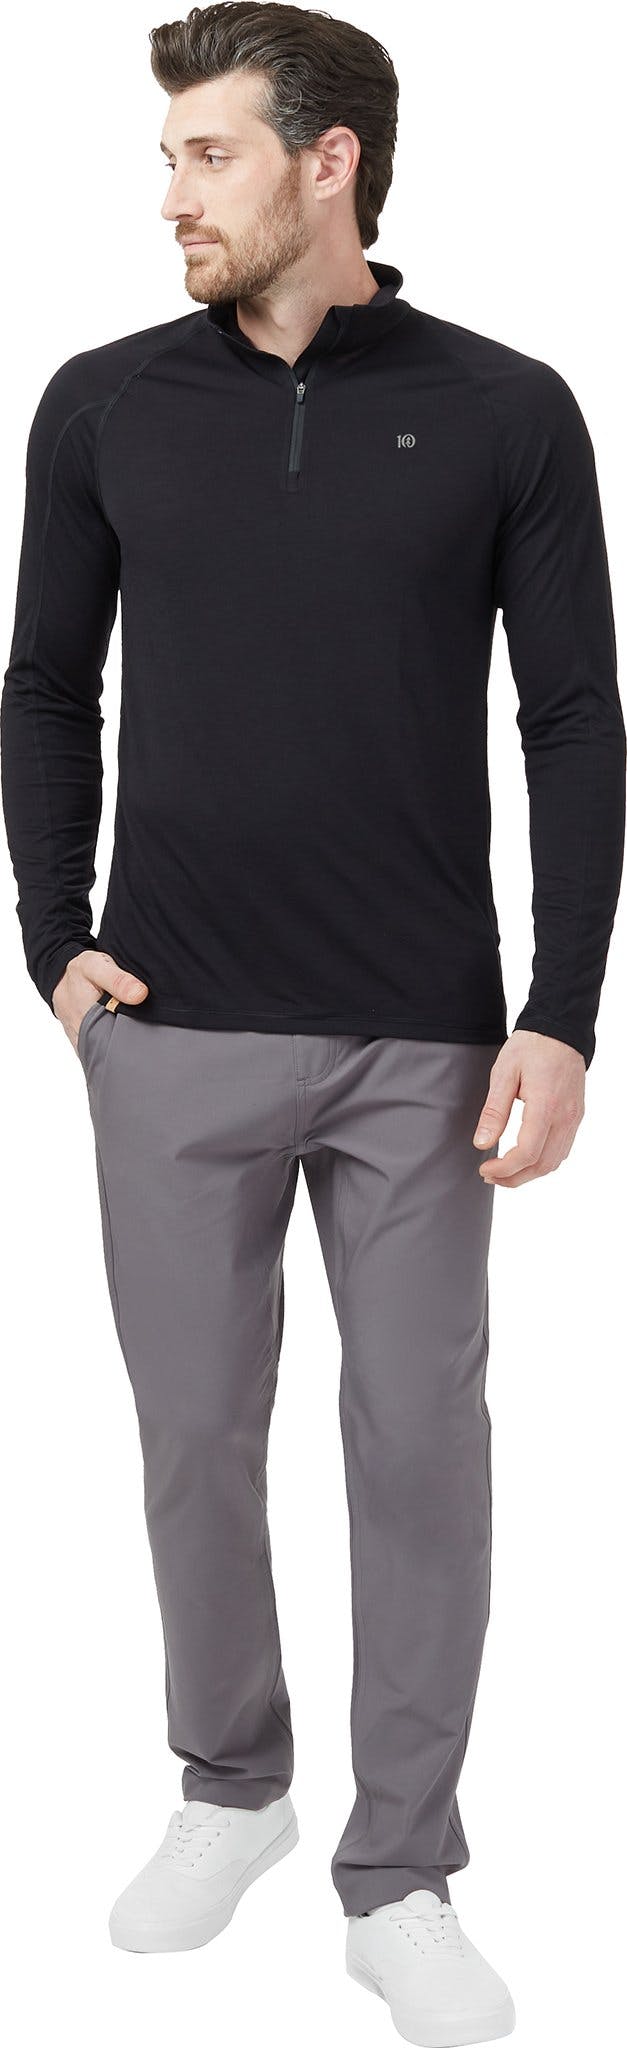 Product image for Destination 1/4 Zip Sweater - Men's